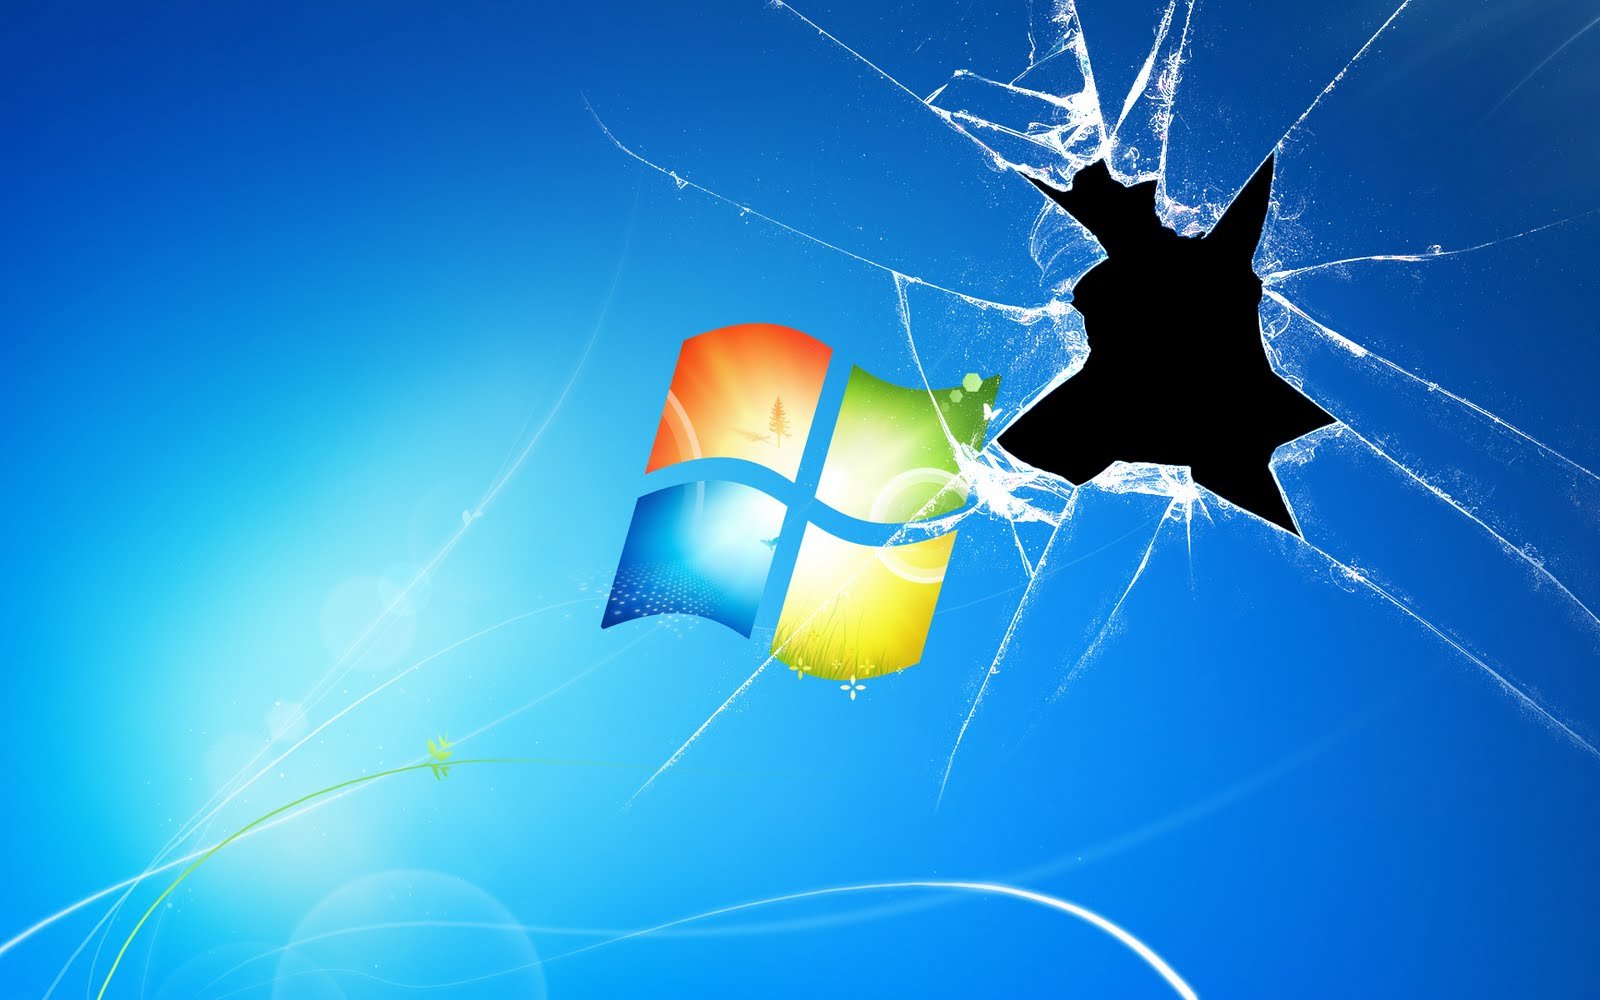 windows 7 broken desktop wallpaper hd windows 7 wallpaper hd windows 7 1600x1000